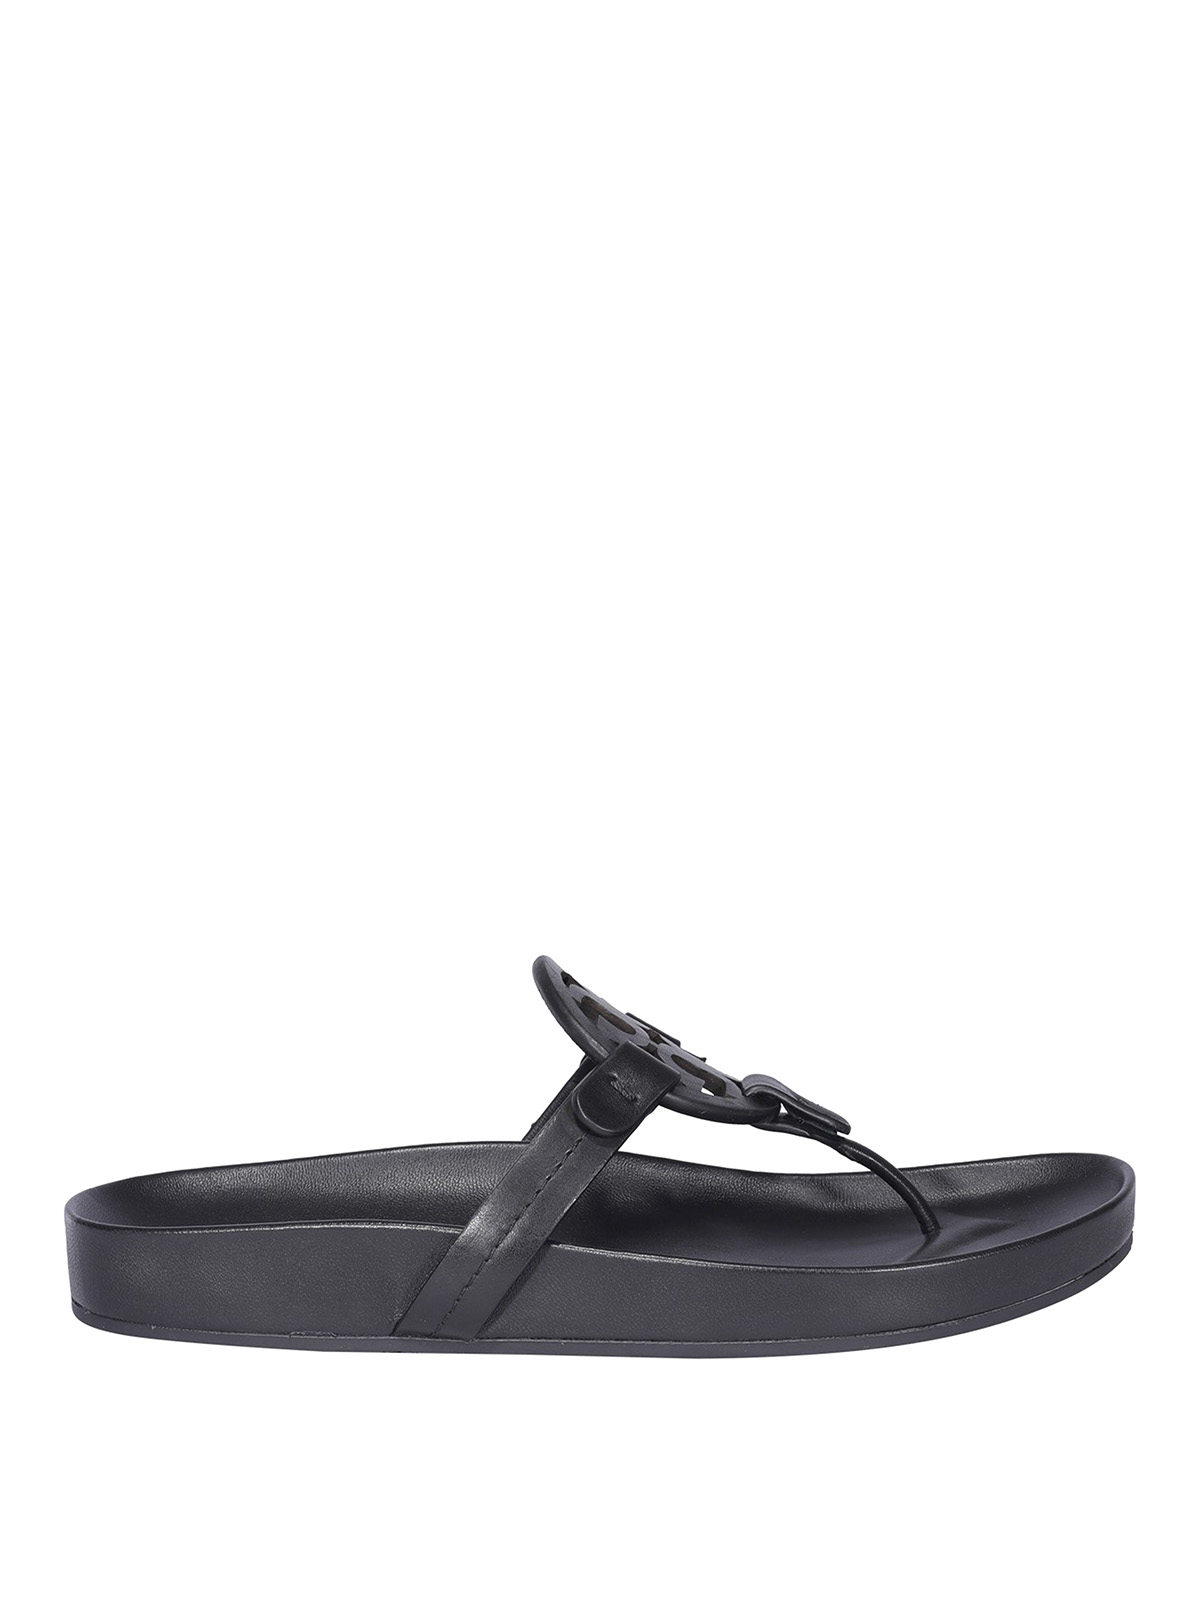 Sandals Tory Burch - Miller sandals - 81032004 | Shop online at iKRIX